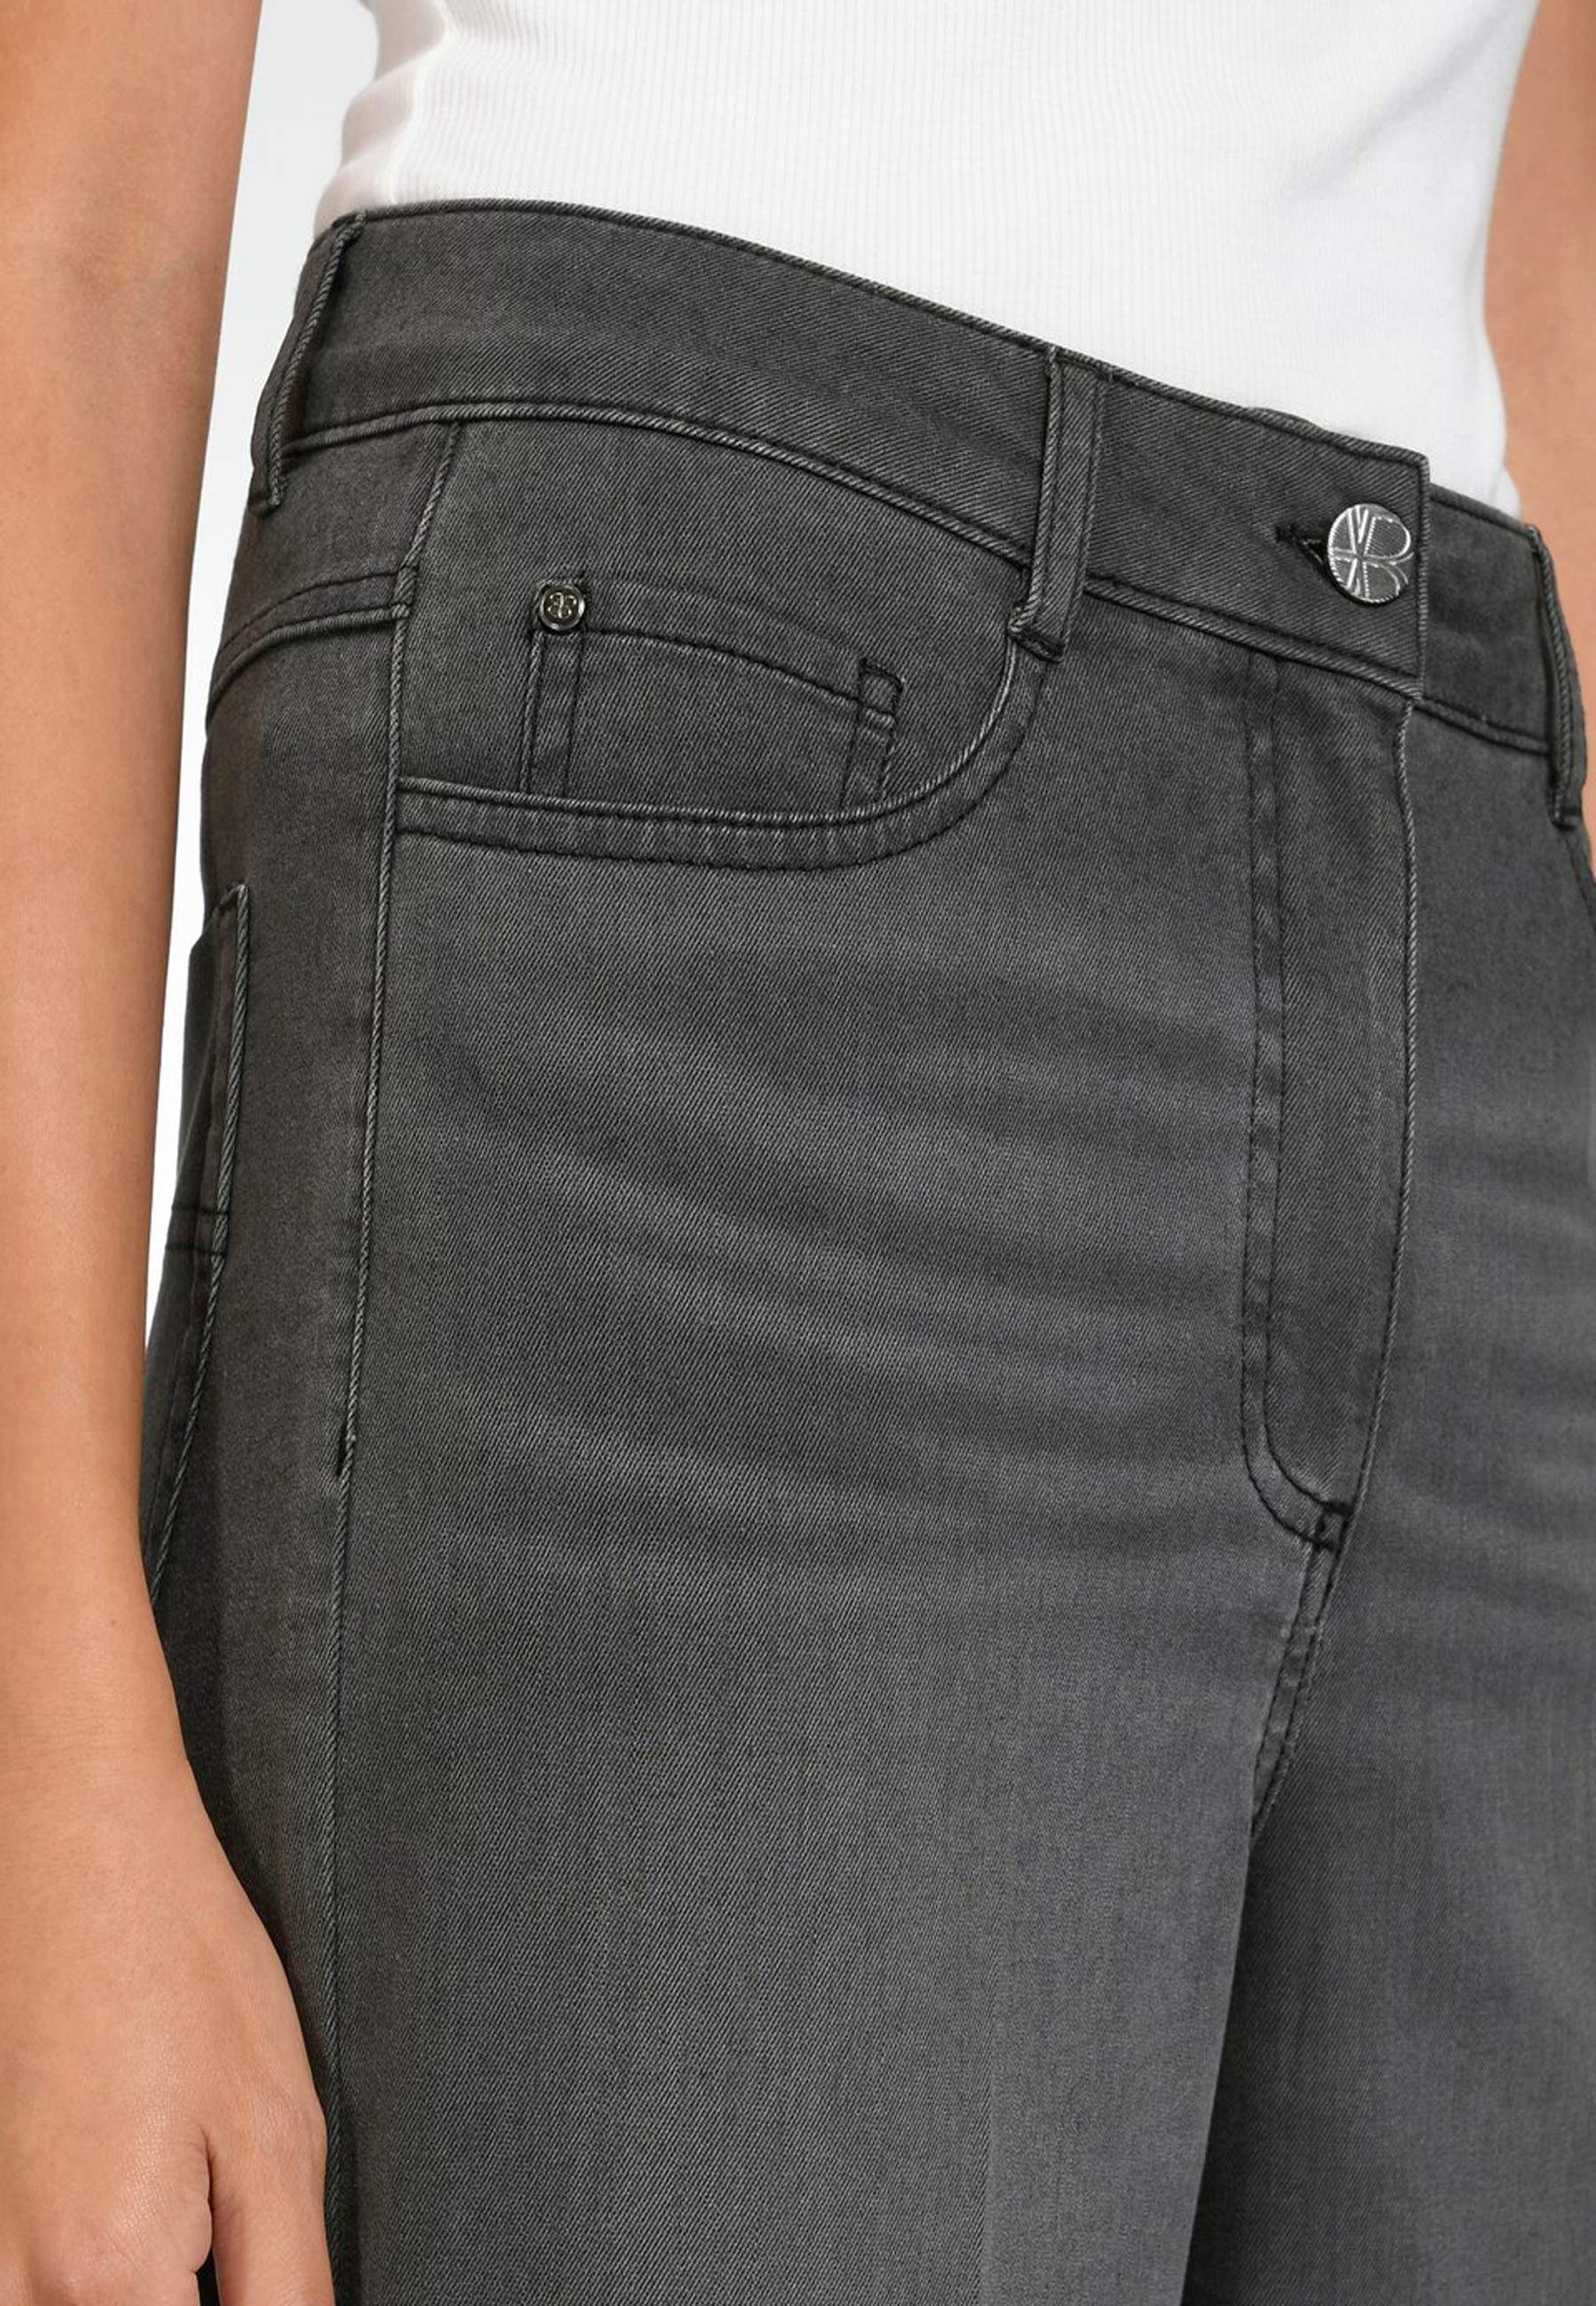 mit Basler Cotton klassischem Design hellgrau 5-Pocket-Jeans